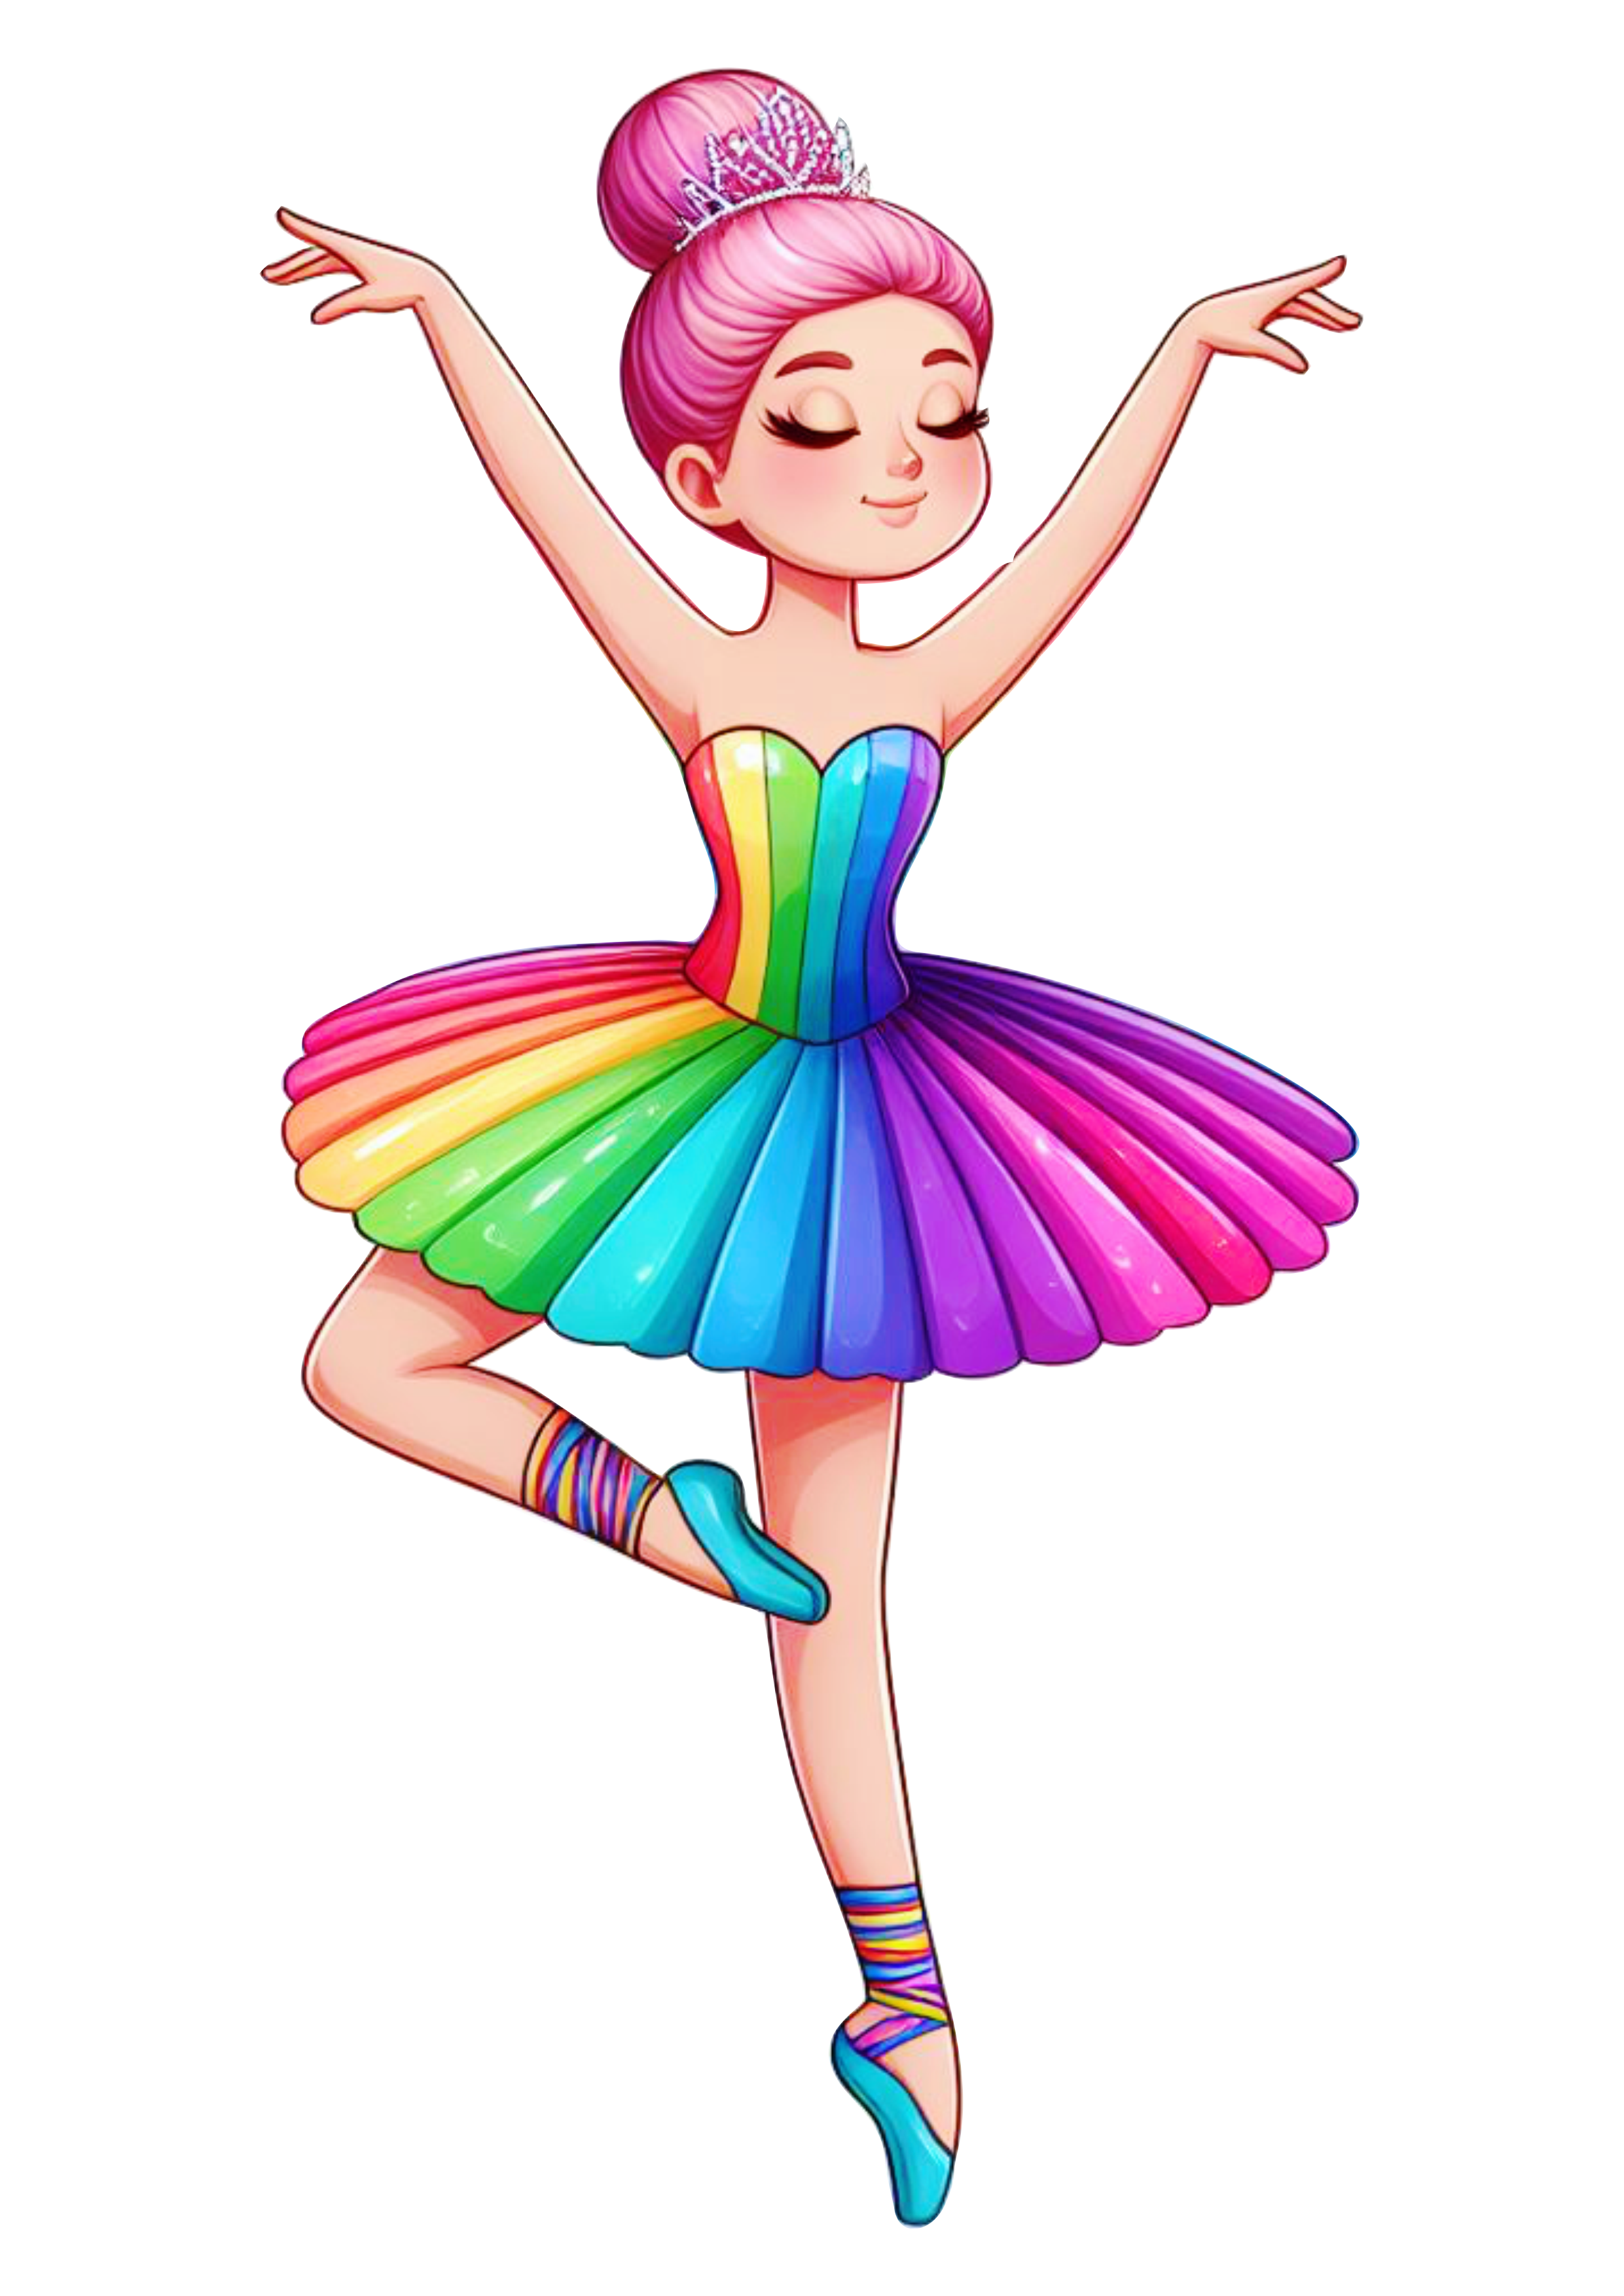 Bailarina menina ruiva com roupa colorida png